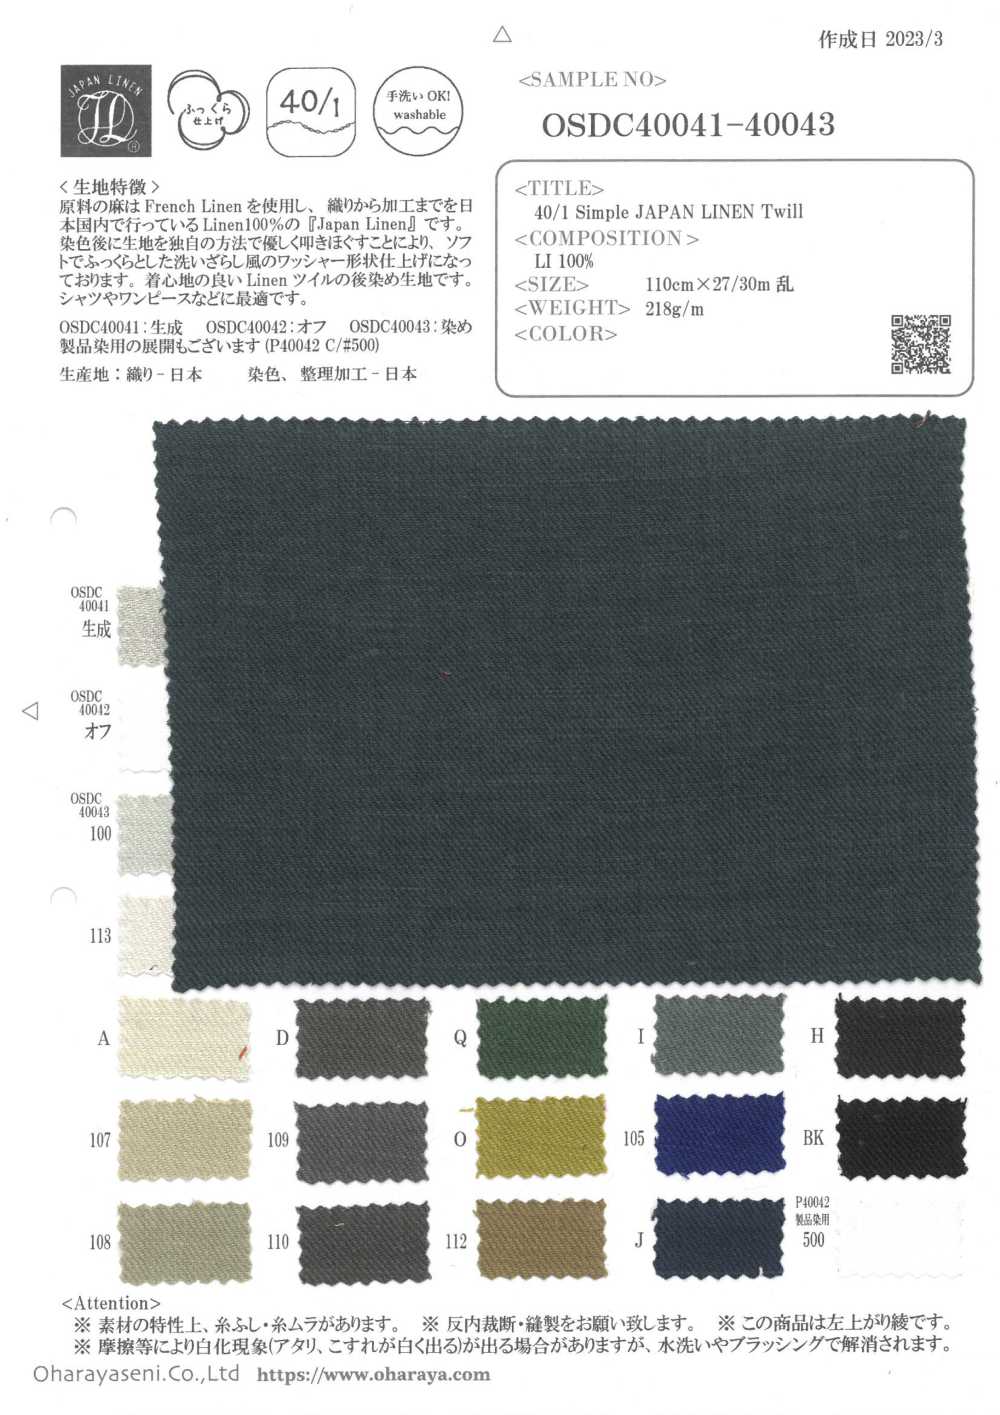 OSDC40041 40/1 Simple JAPAN LINEN Twill (Ecru)[Textile / Fabric] Oharayaseni